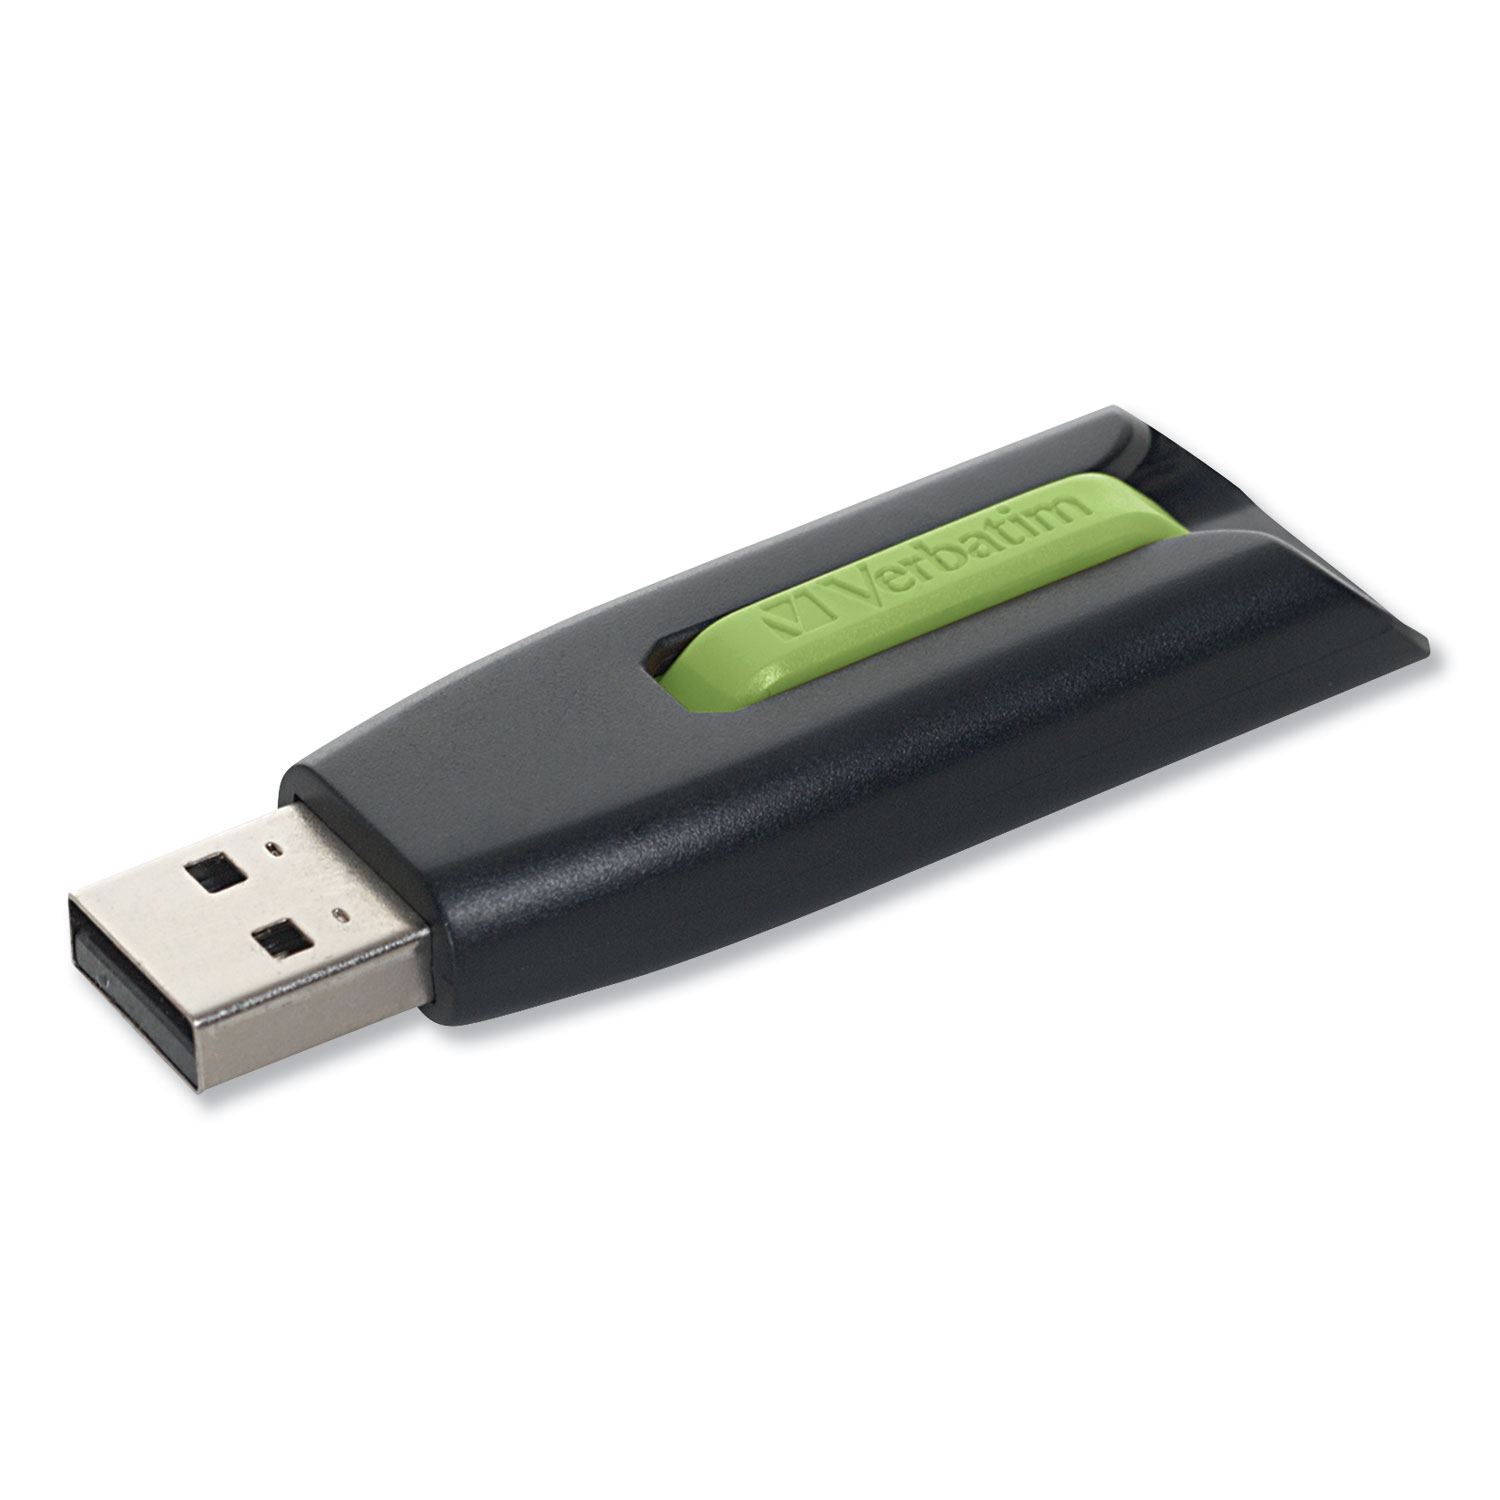  Verbatim 49177 Store 'n' Go V3 USB 3.0 Drive, 16 GB, Black/Green (VER49177) 